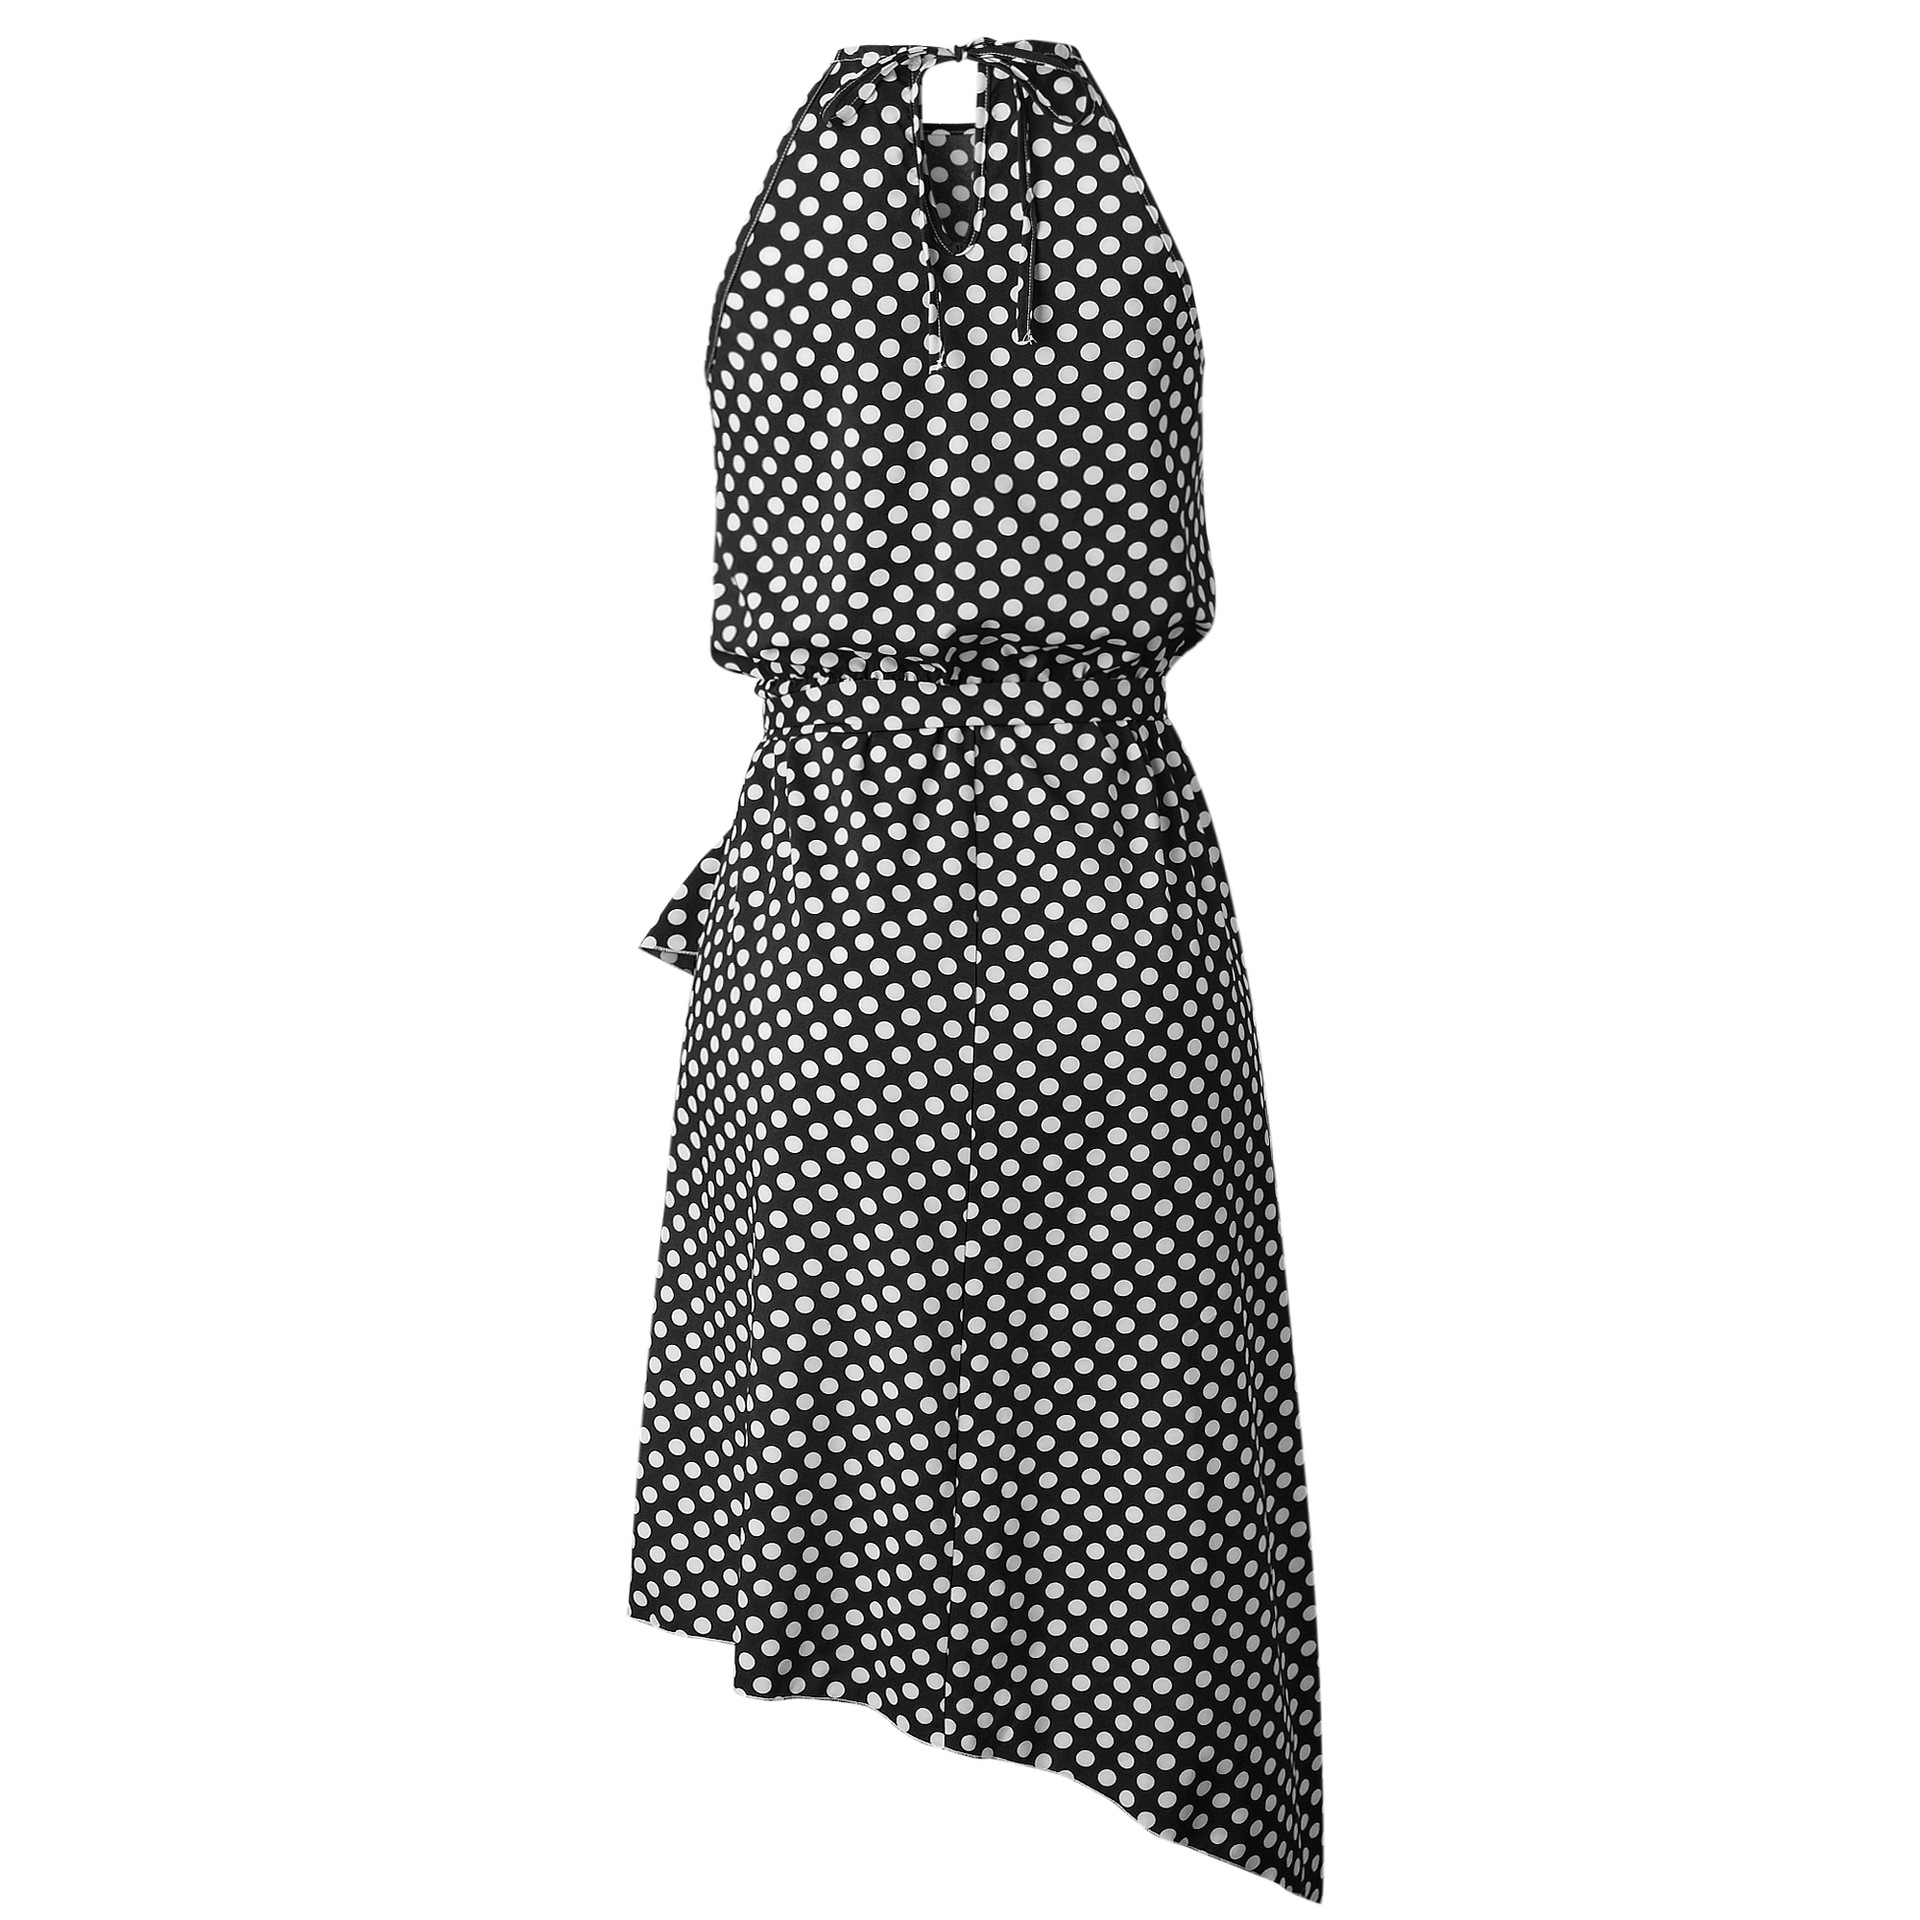 SZ60184-1 midi dresses for women